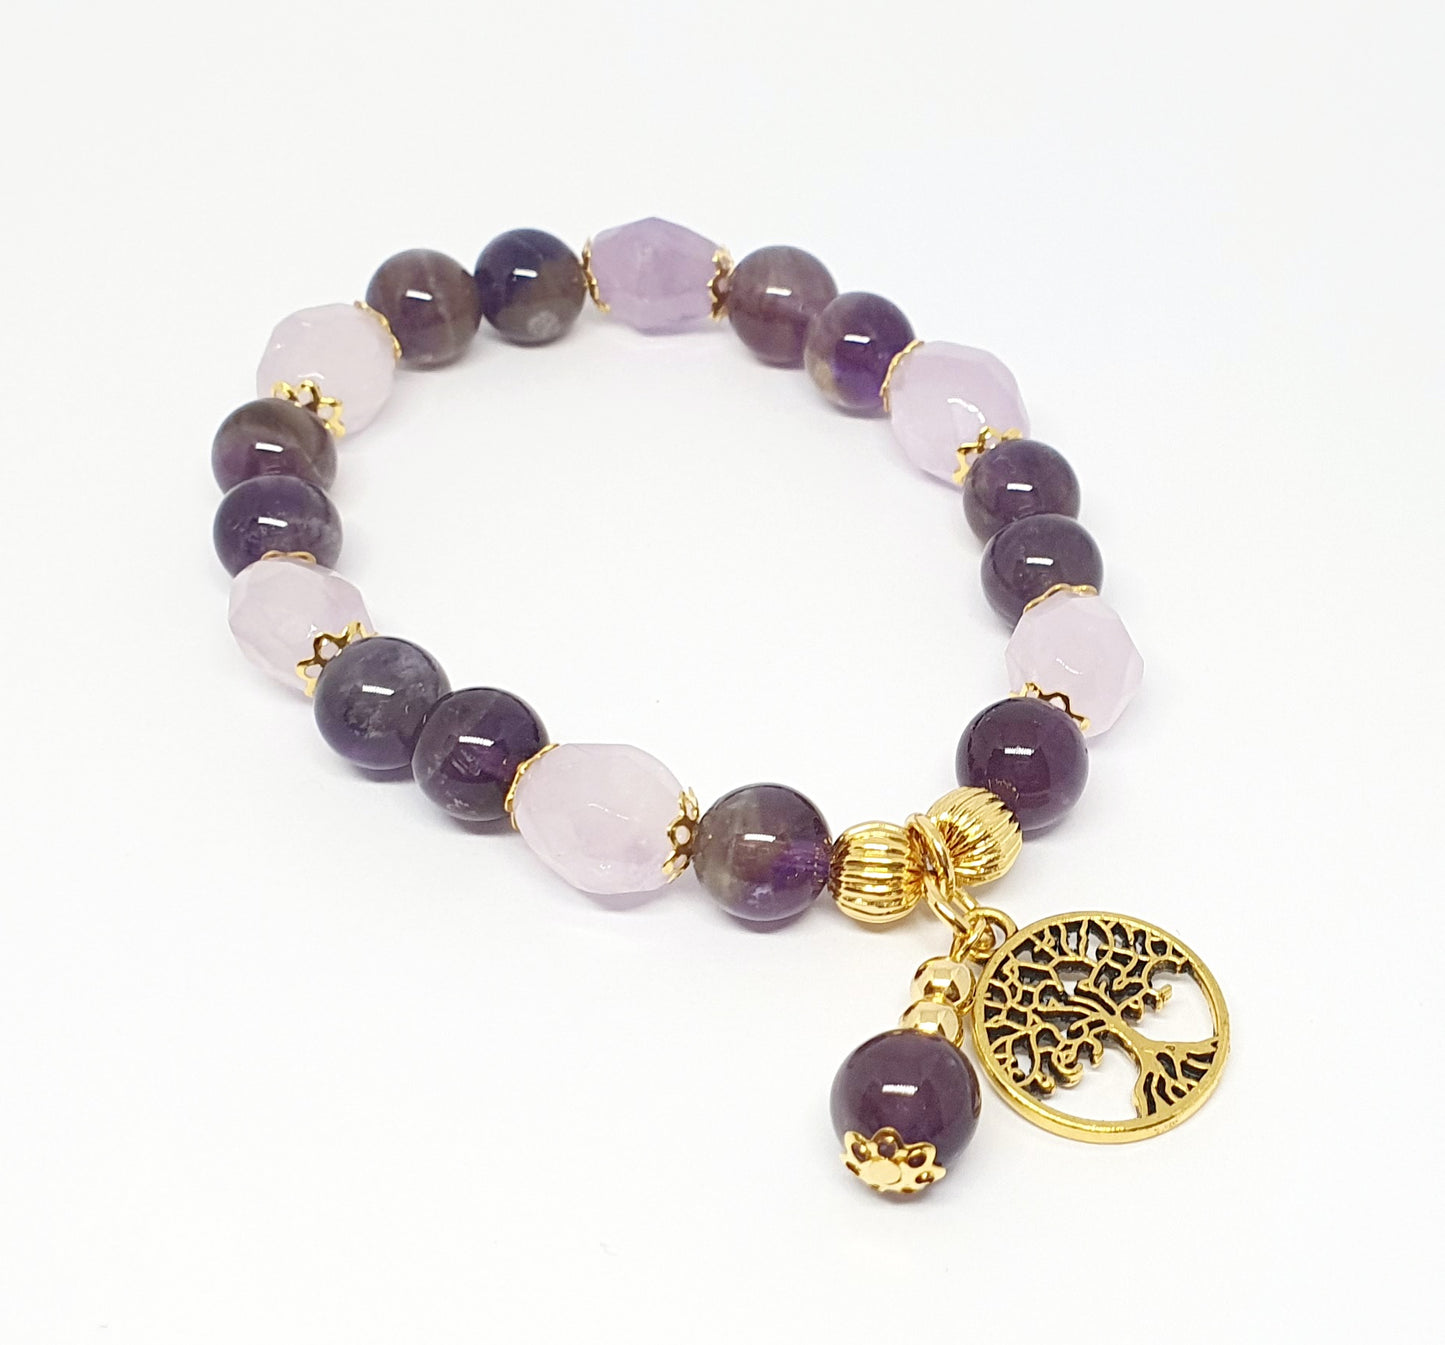 Light and Dark Amethyst with tree of life gemstone bracelet - Gems & stones ph